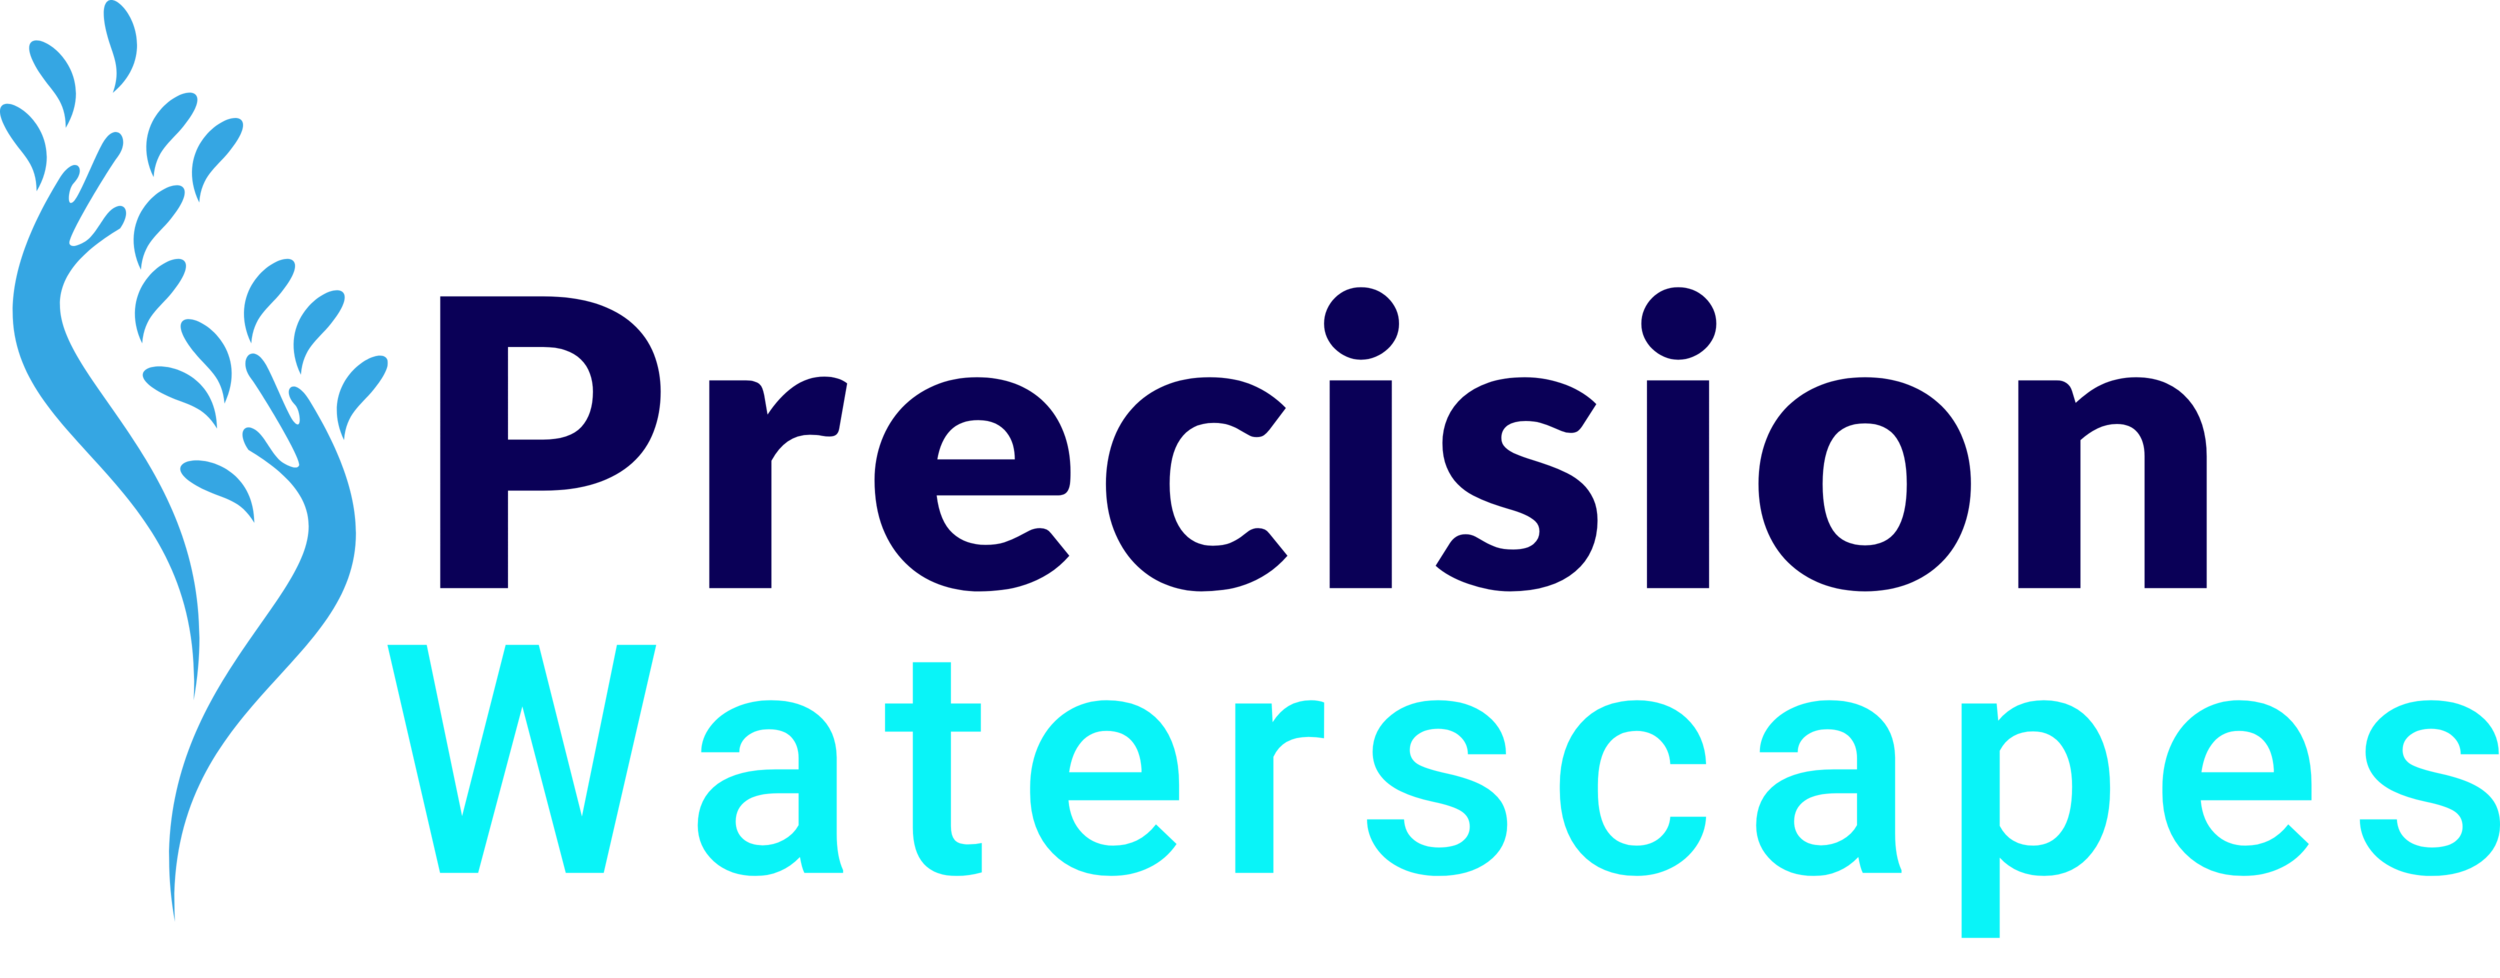 Precision Waterscapes